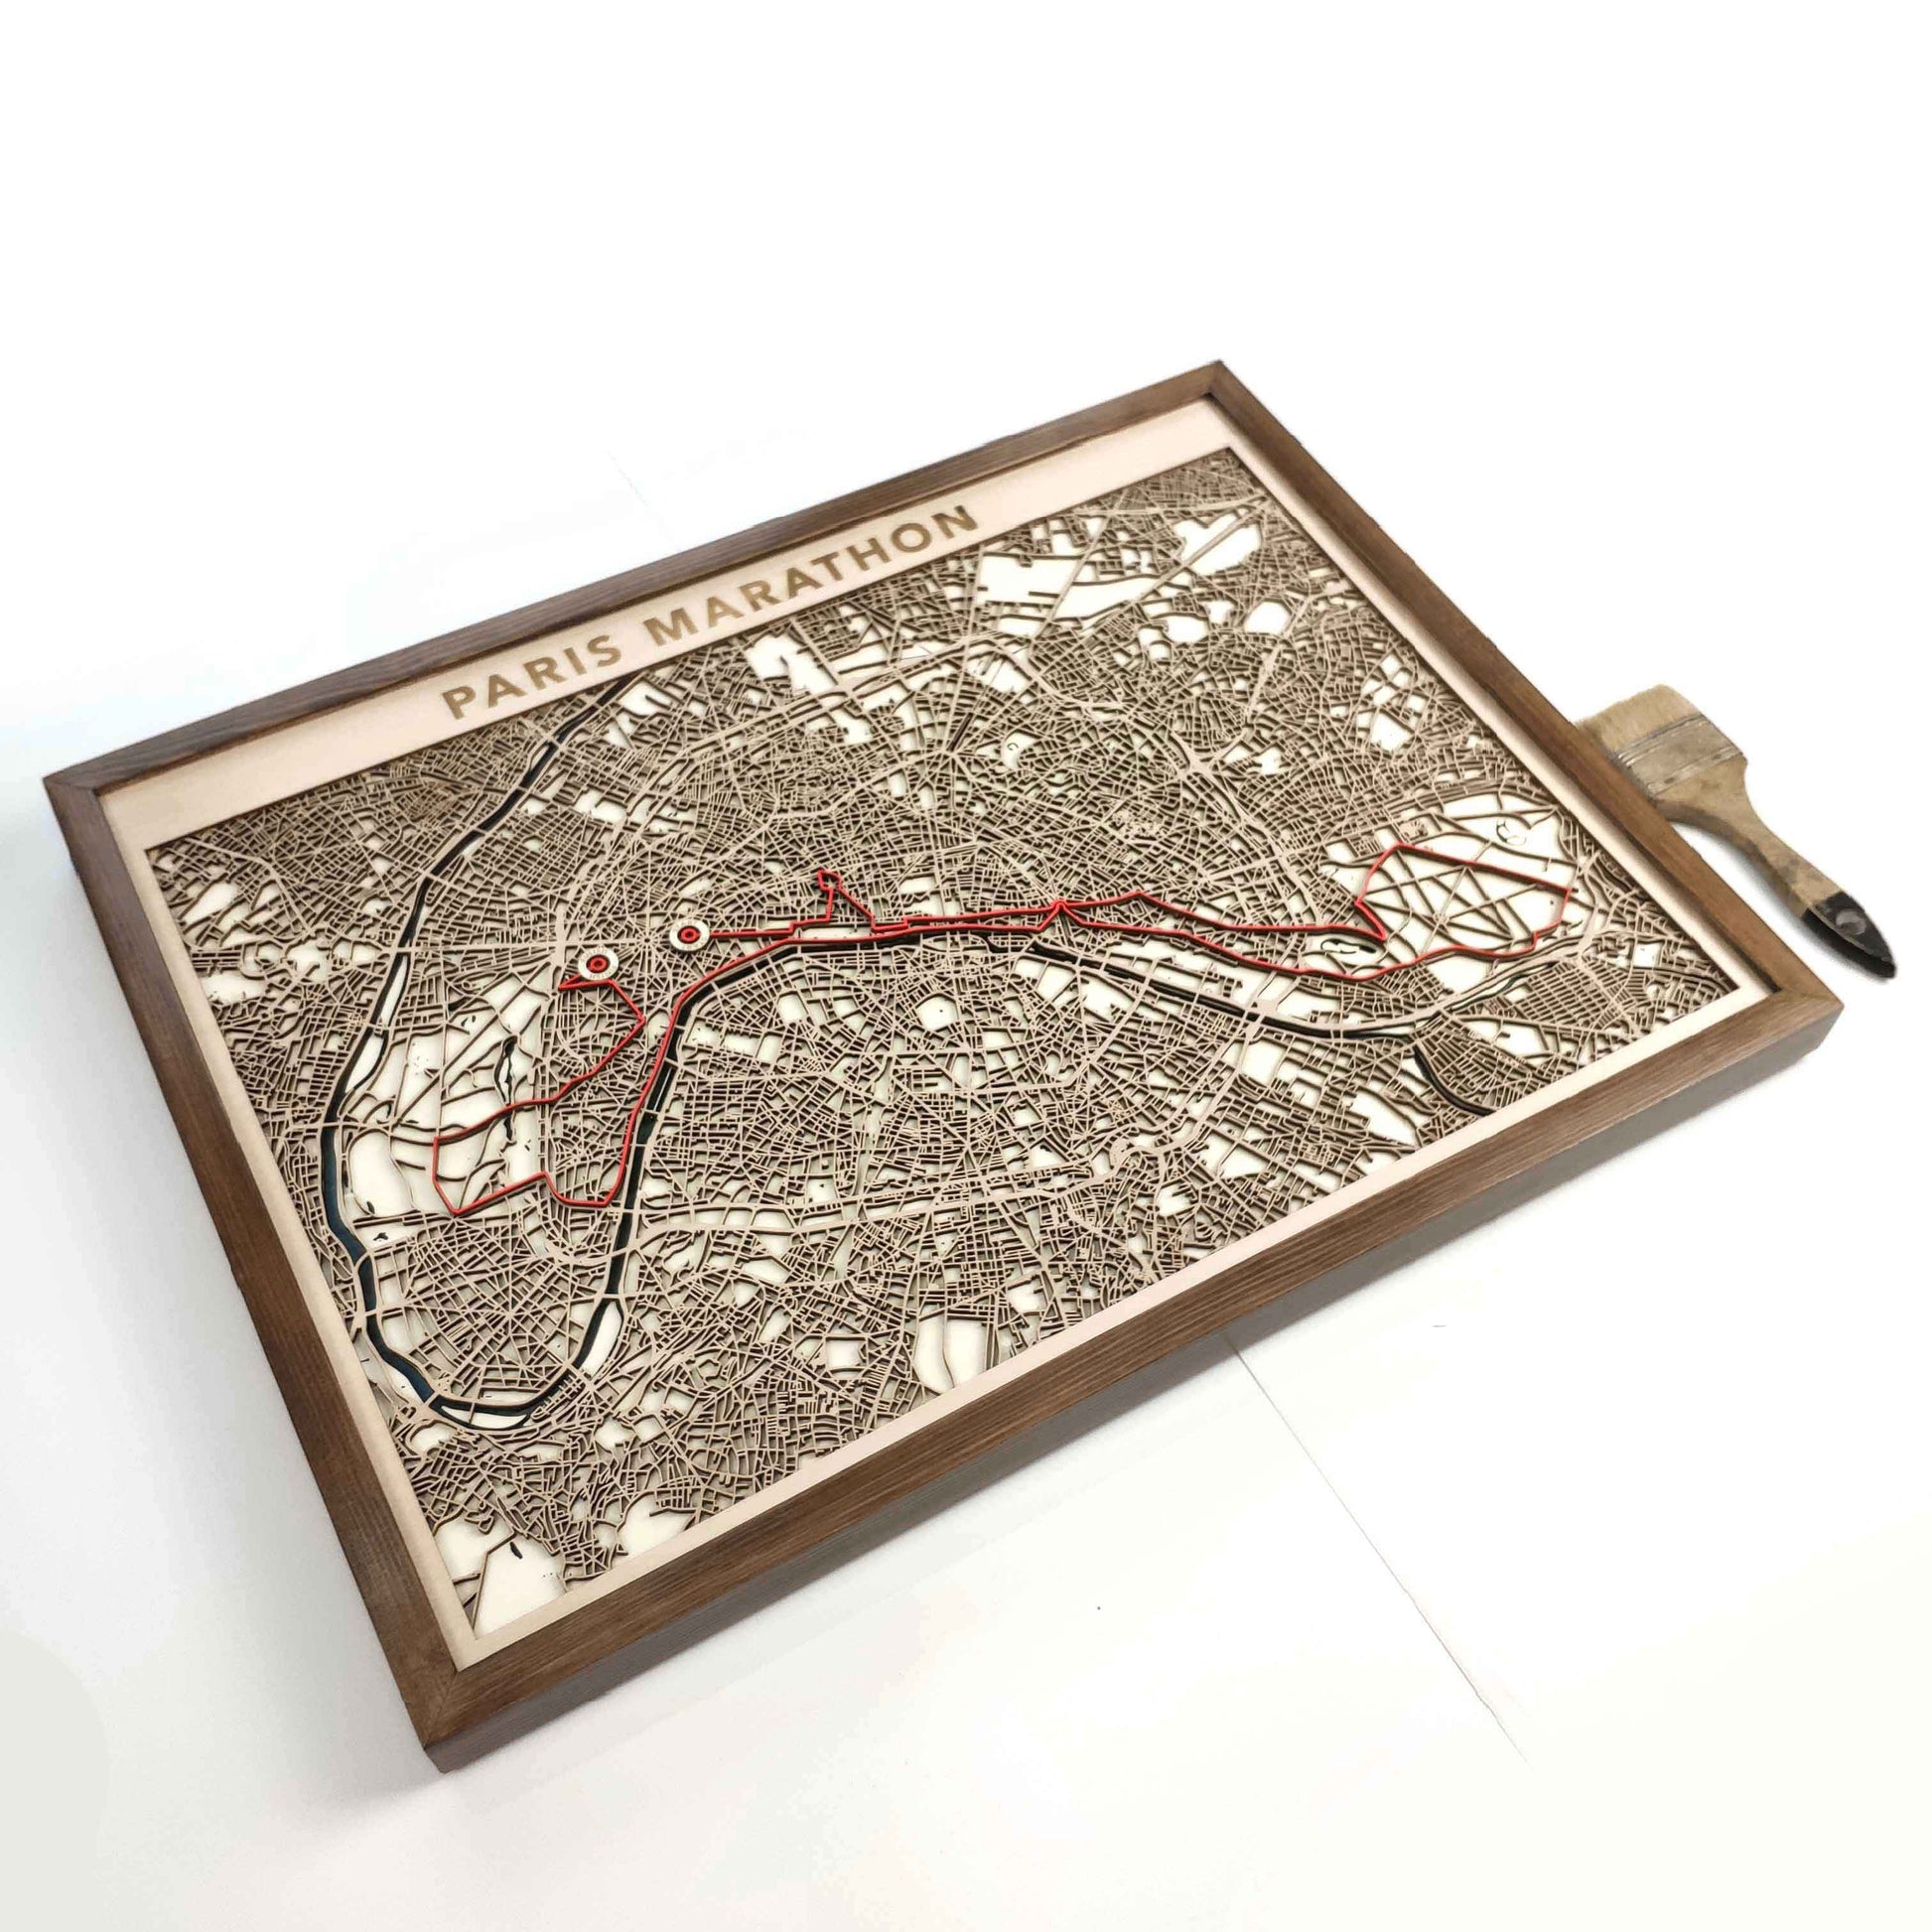 Paris Marathon Laser-Cut Wooden Map – Unique Runner Poster Gift by CityWood - Custom Wood Map Art - Unique Laser Cut Engraved - Anniversary Gift